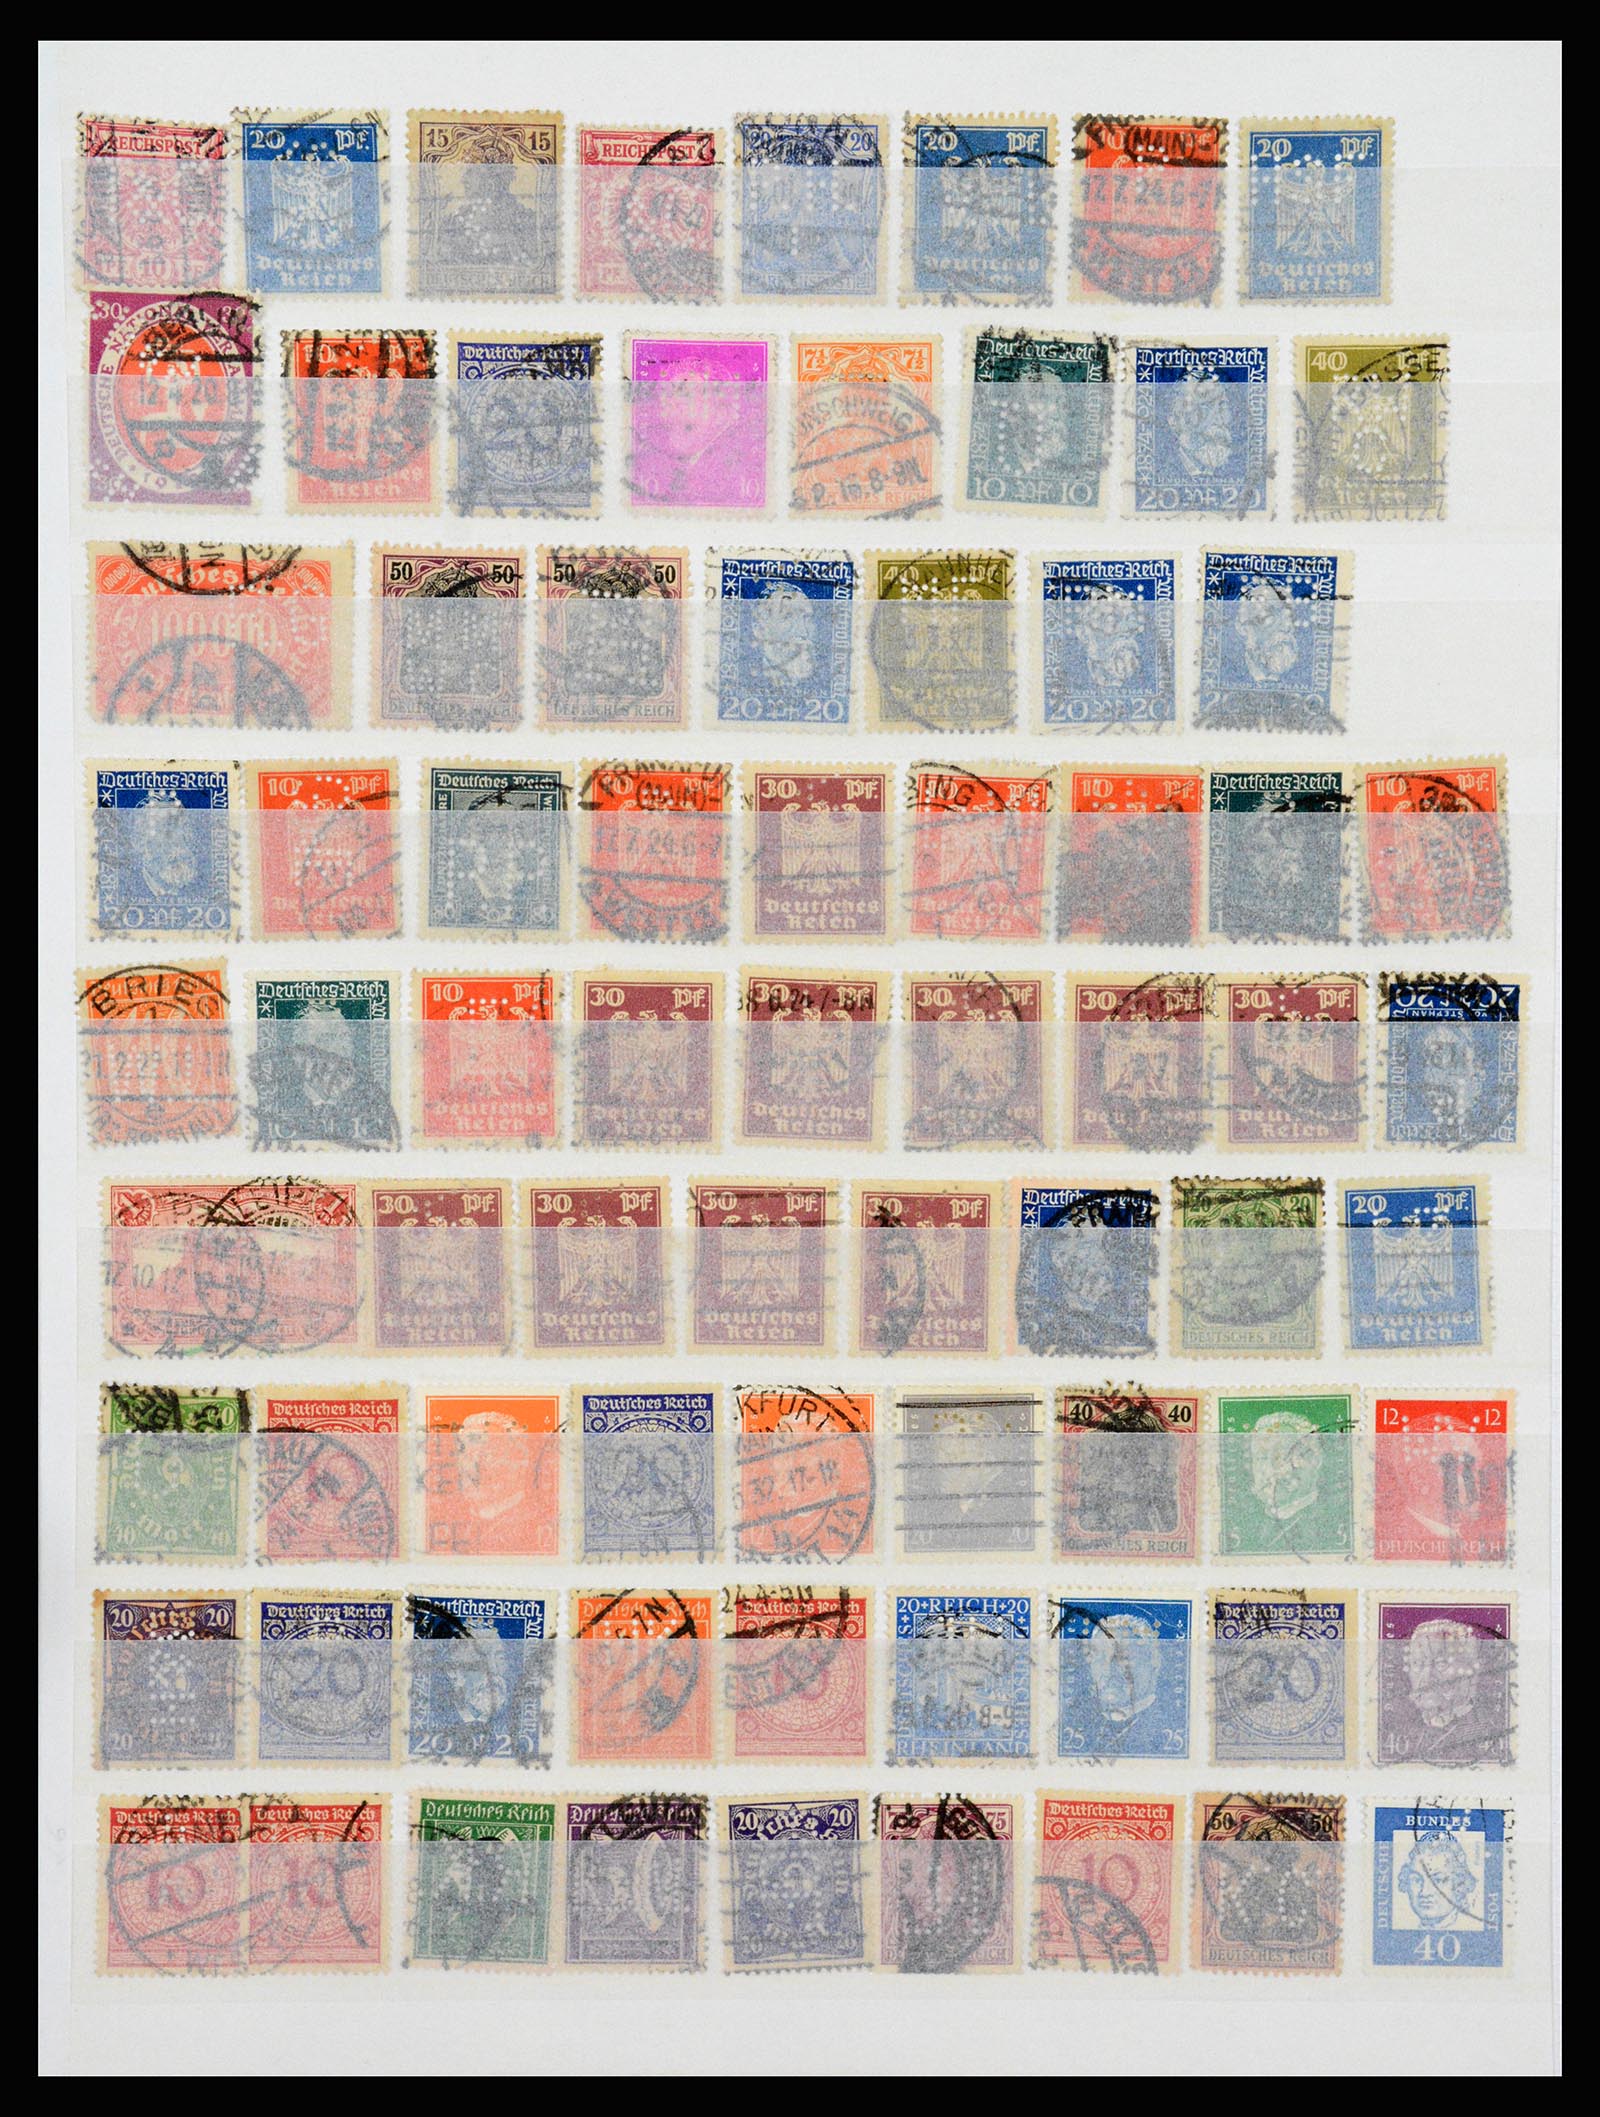 37254 004 - Postzegelverzameling 37254 Duitse Rijk perfins 1900-1945.